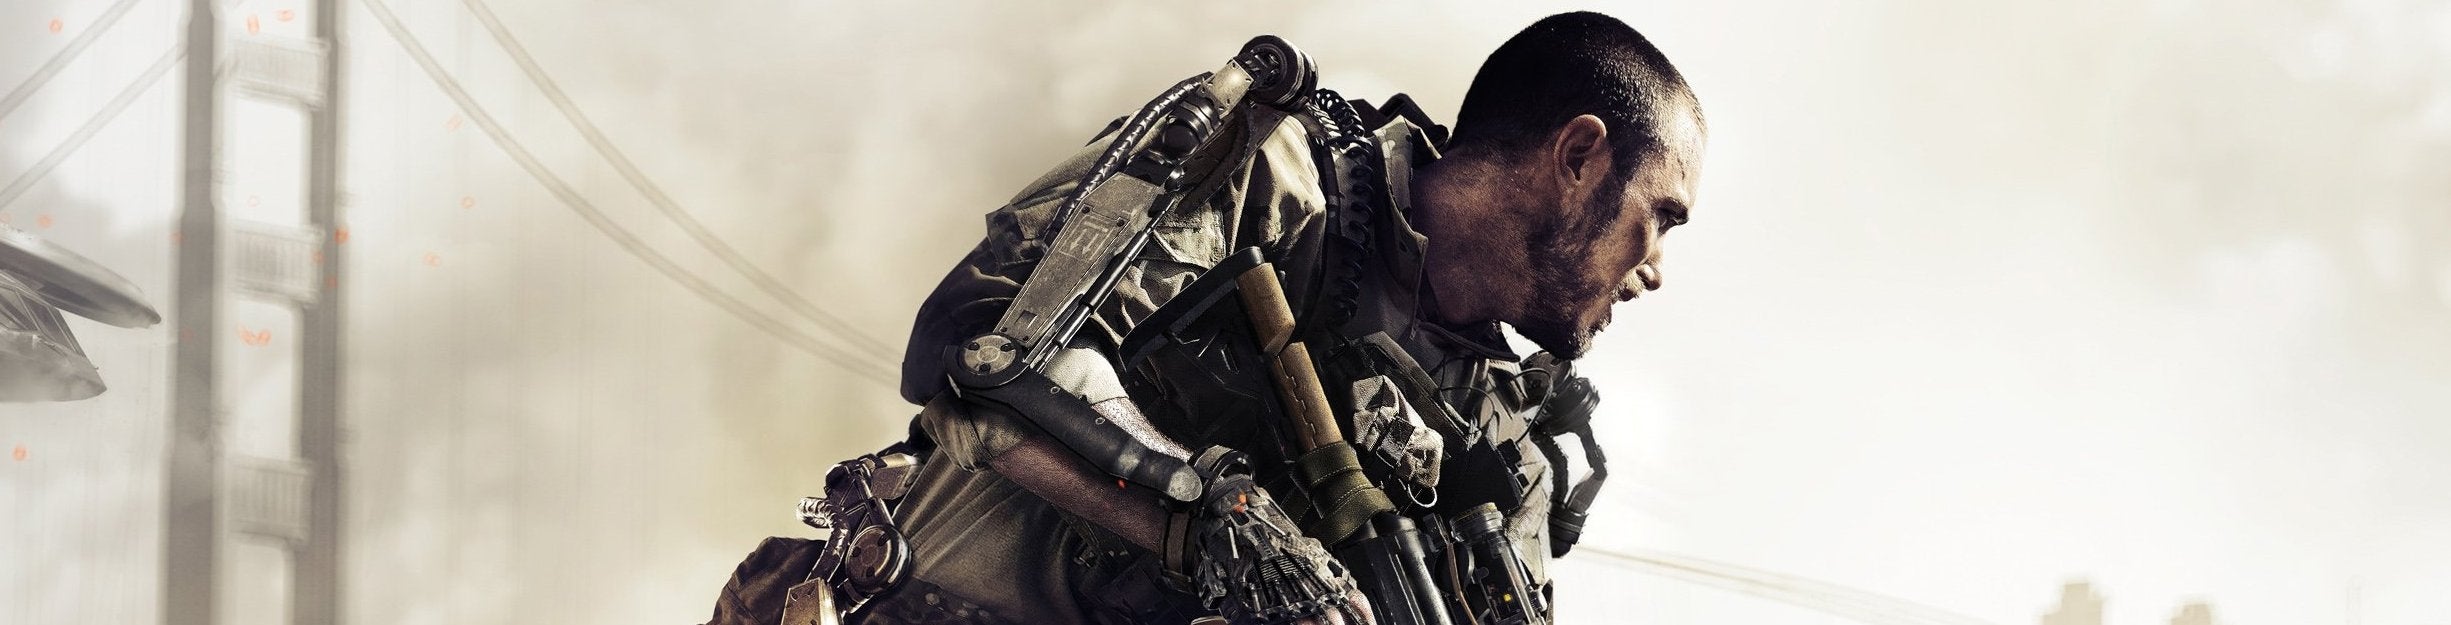 Image for RECENZE Call of Duty: Advanced Warfare